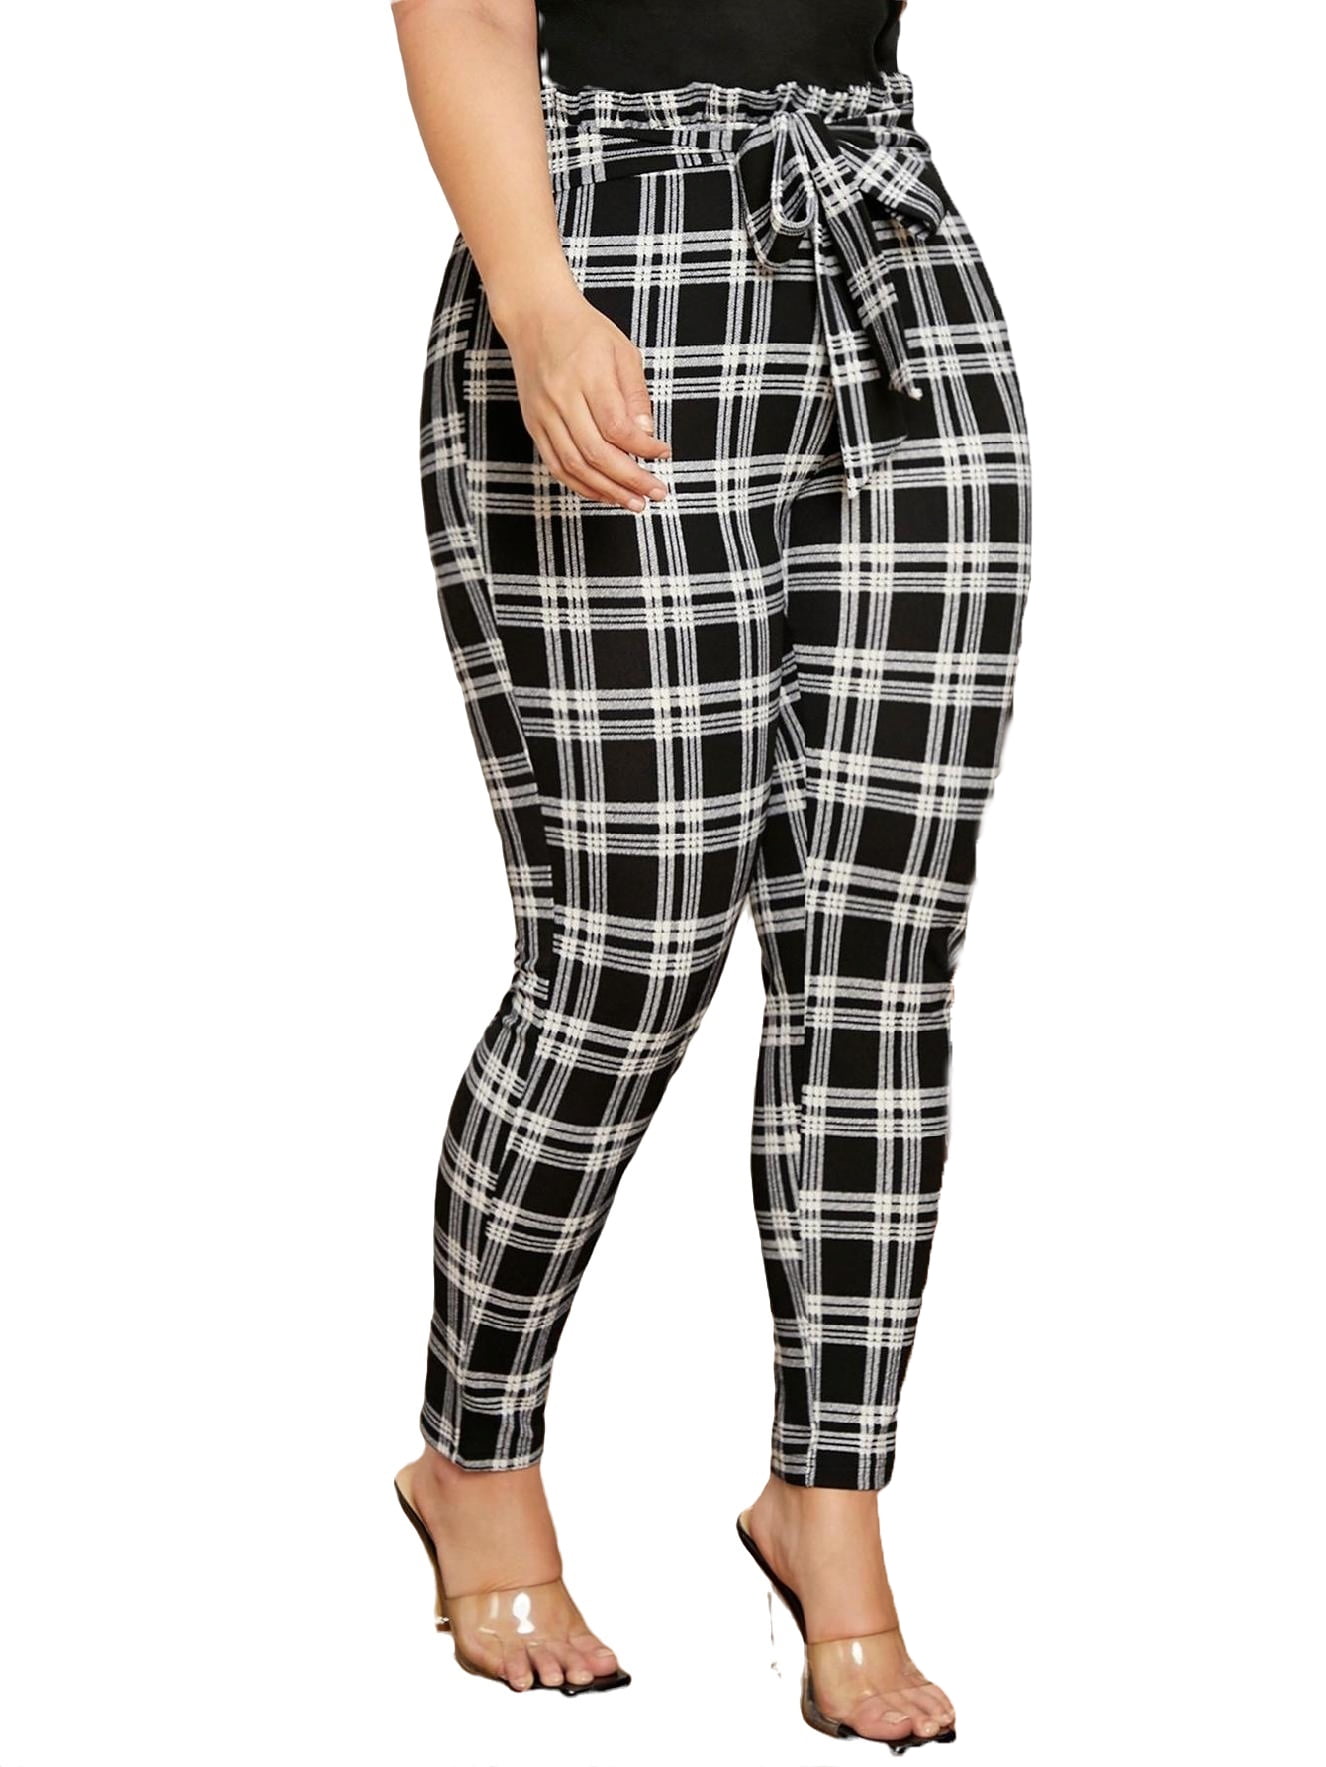 Casual Plaid Skinny Black and White Plus Size Pants (Women's) - Walmart.com